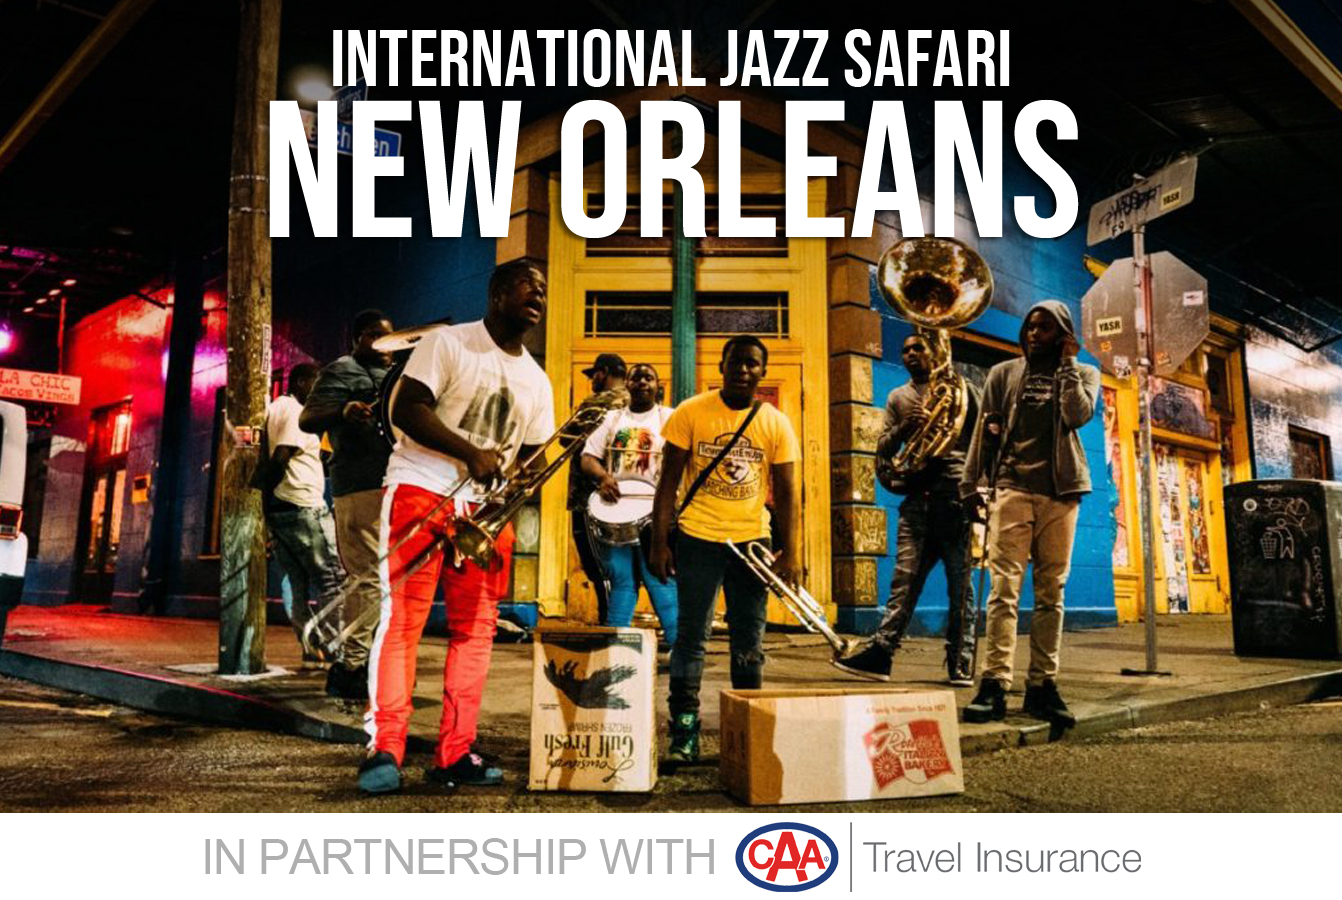 JAZZ.FM91 & CAA International Jazz Safari to New Orleans